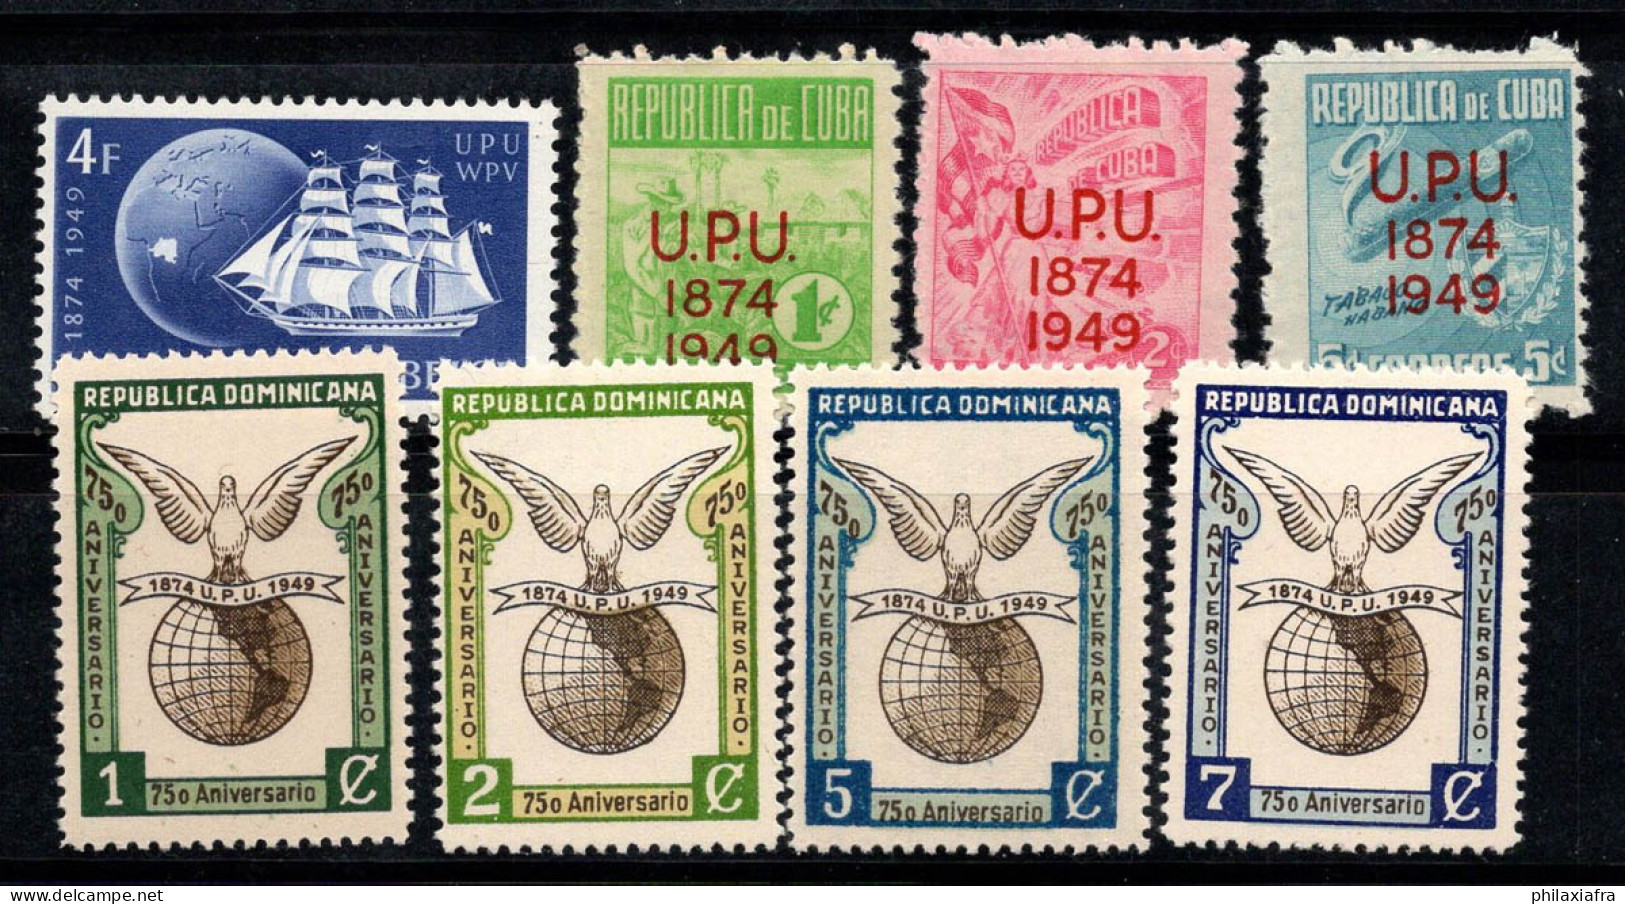 UPU 1949-50 Neuf ** 100% République Dominicaine, Congo - UPU (Universal Postal Union)